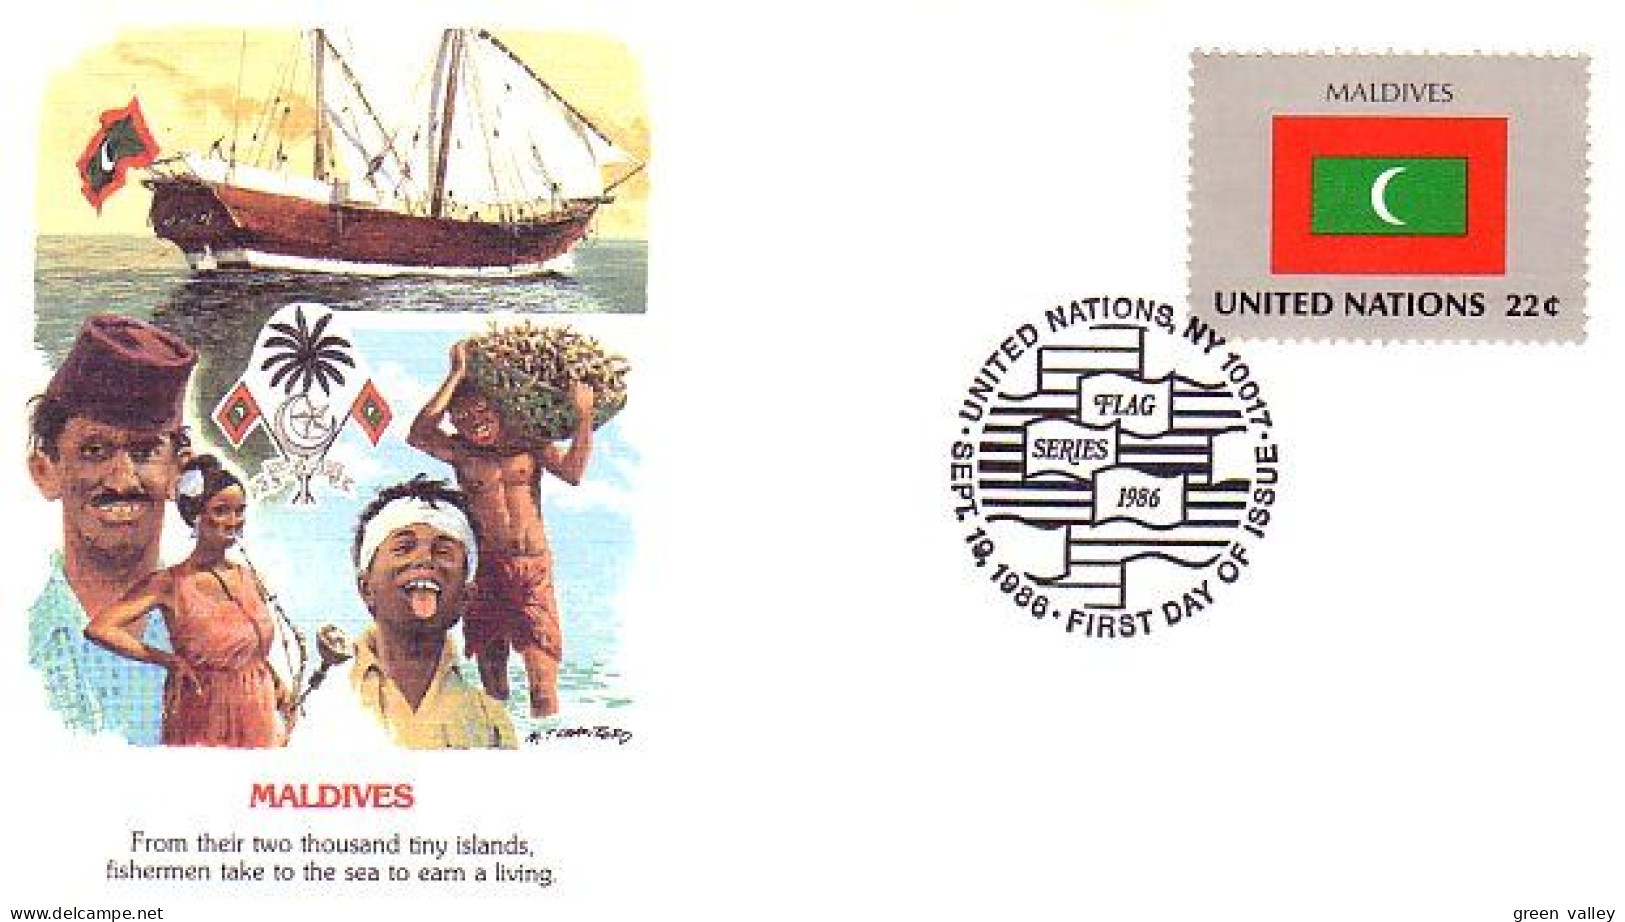 Maldives Flag Drapeau Fishermen FDC Cover ( A90 198) - Covers